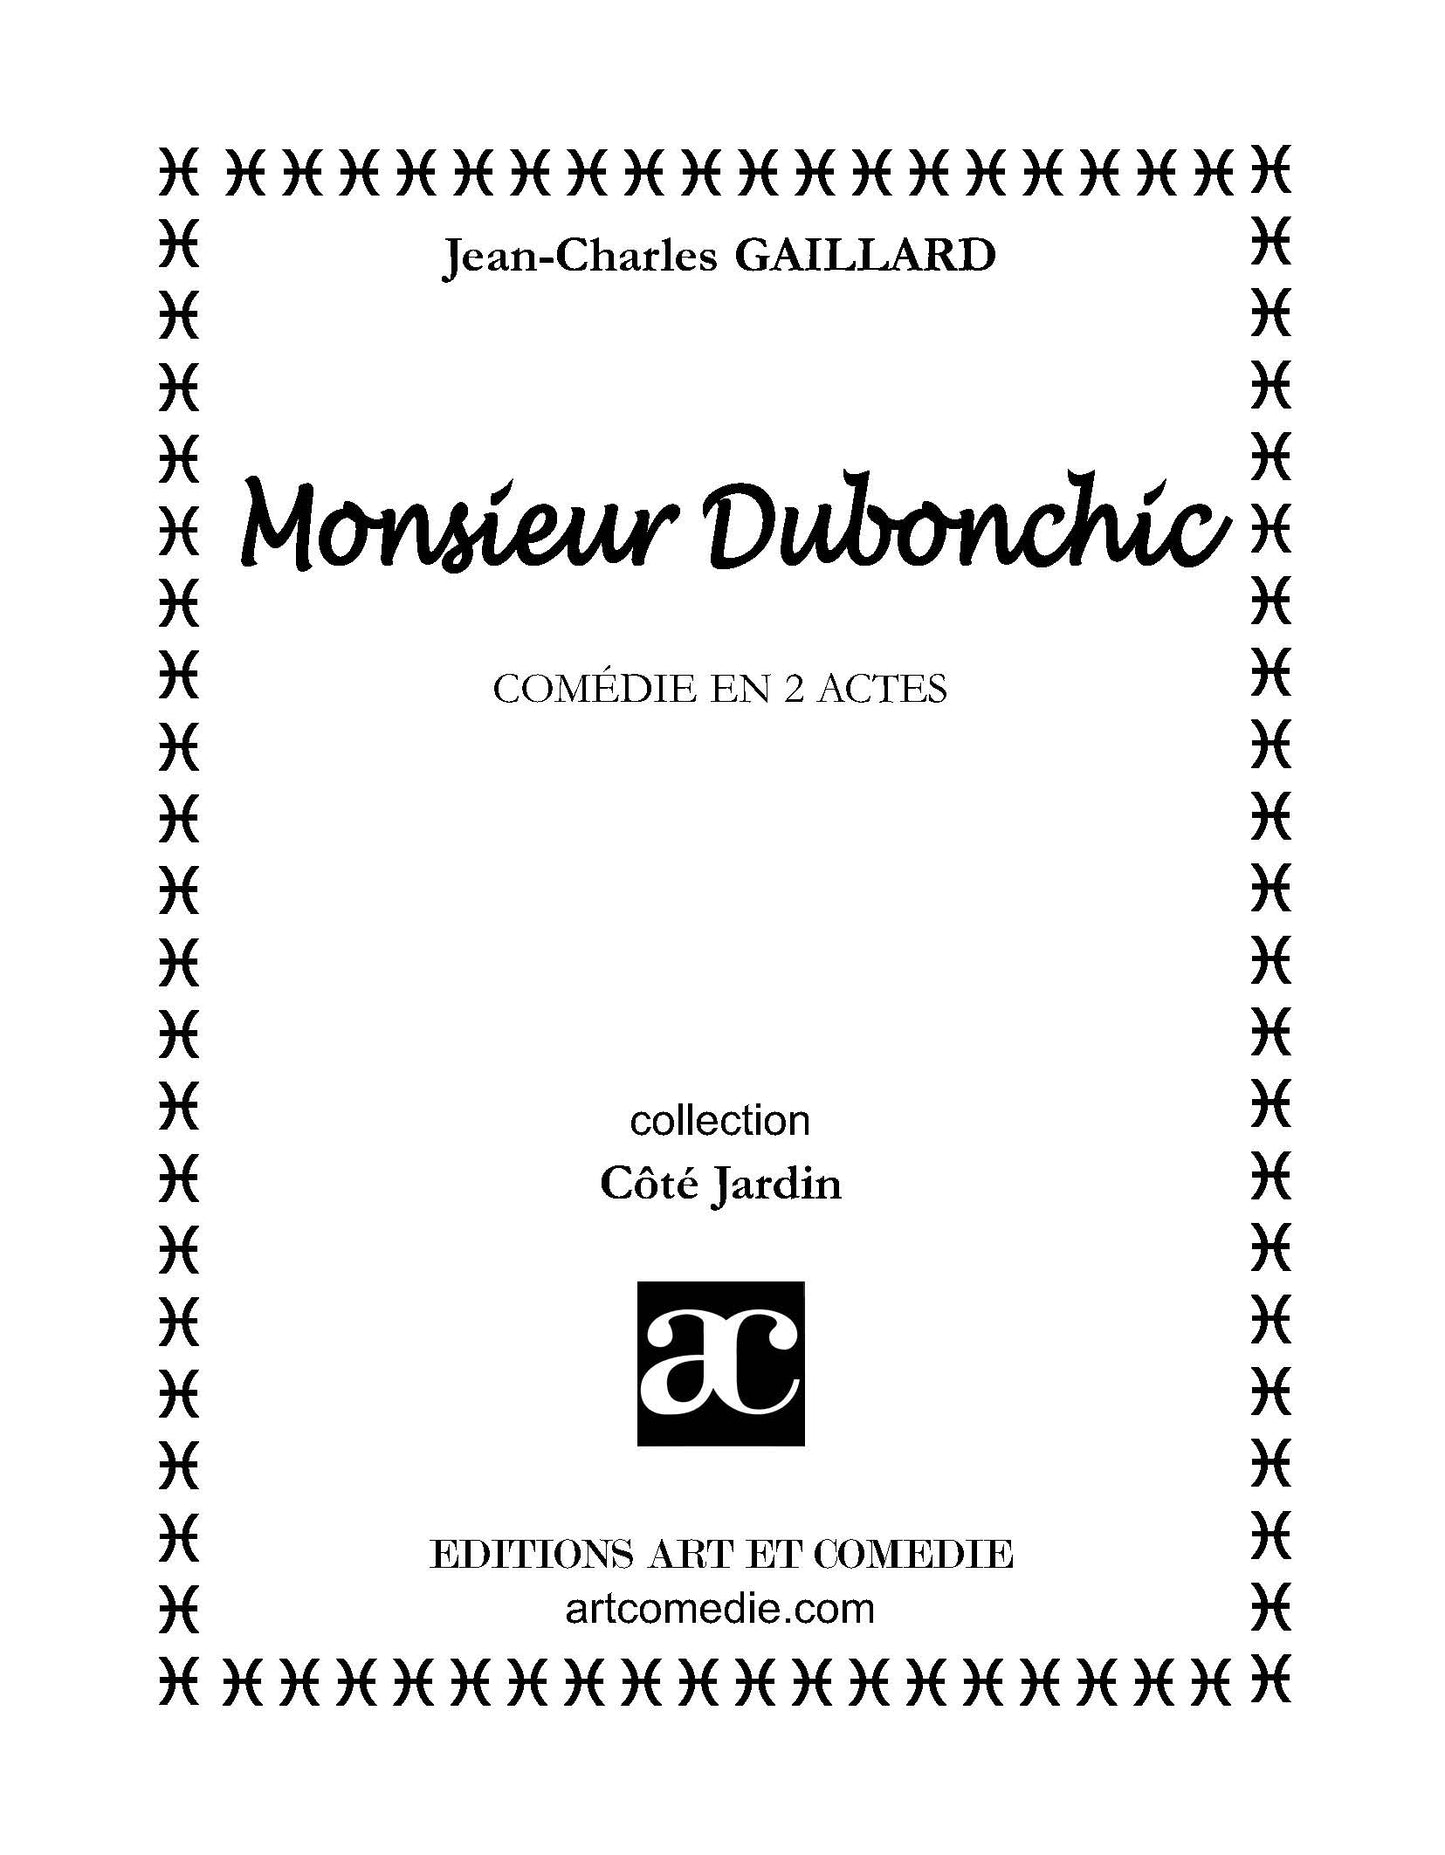 Monsieur Dubonchic